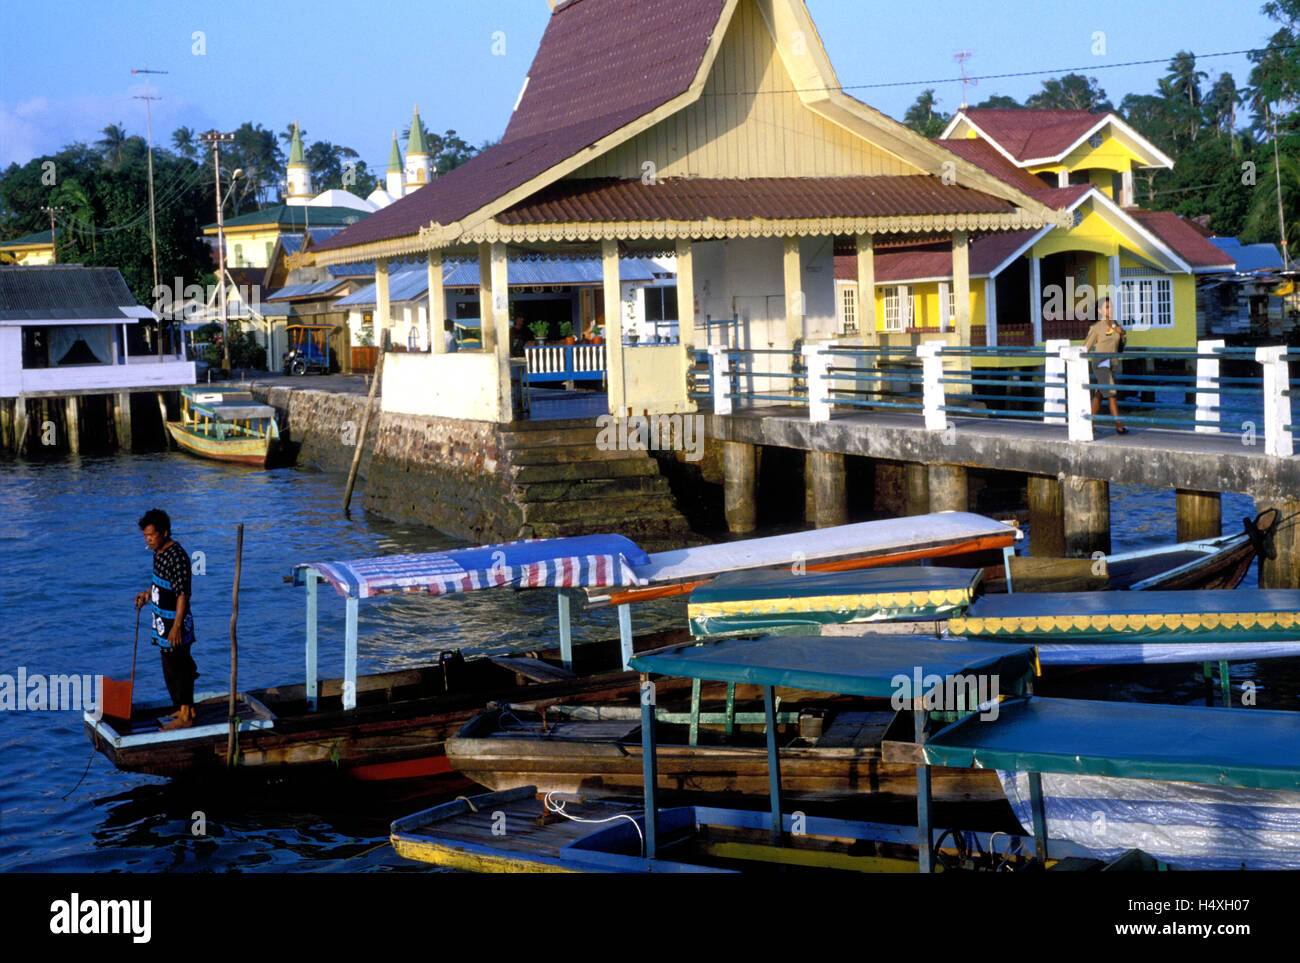 Indonesien-Bintan Fähre Hafen Hafen Szene penyenget Stockfoto